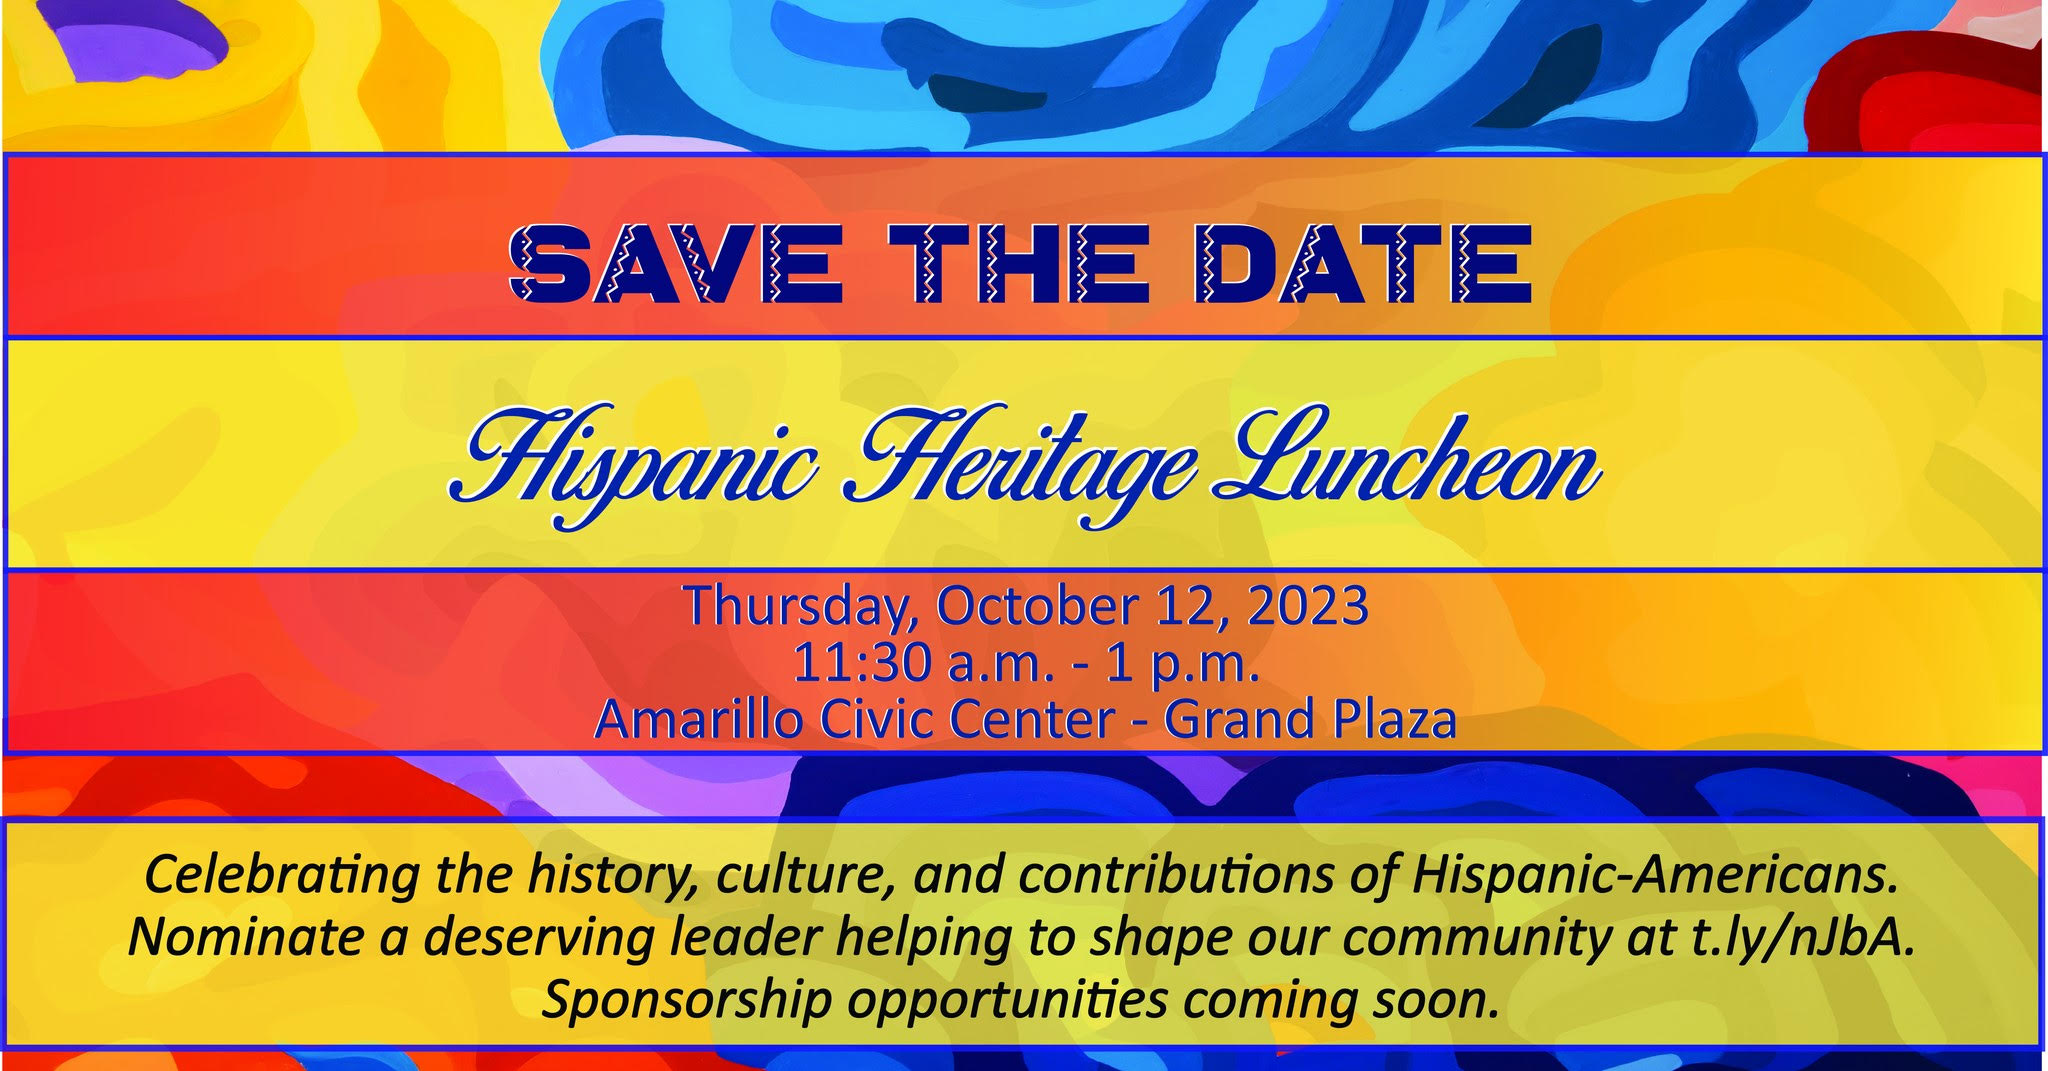 Hispanic Heritage Luncheon @ Amarillo Civic Center - Grand Plaza